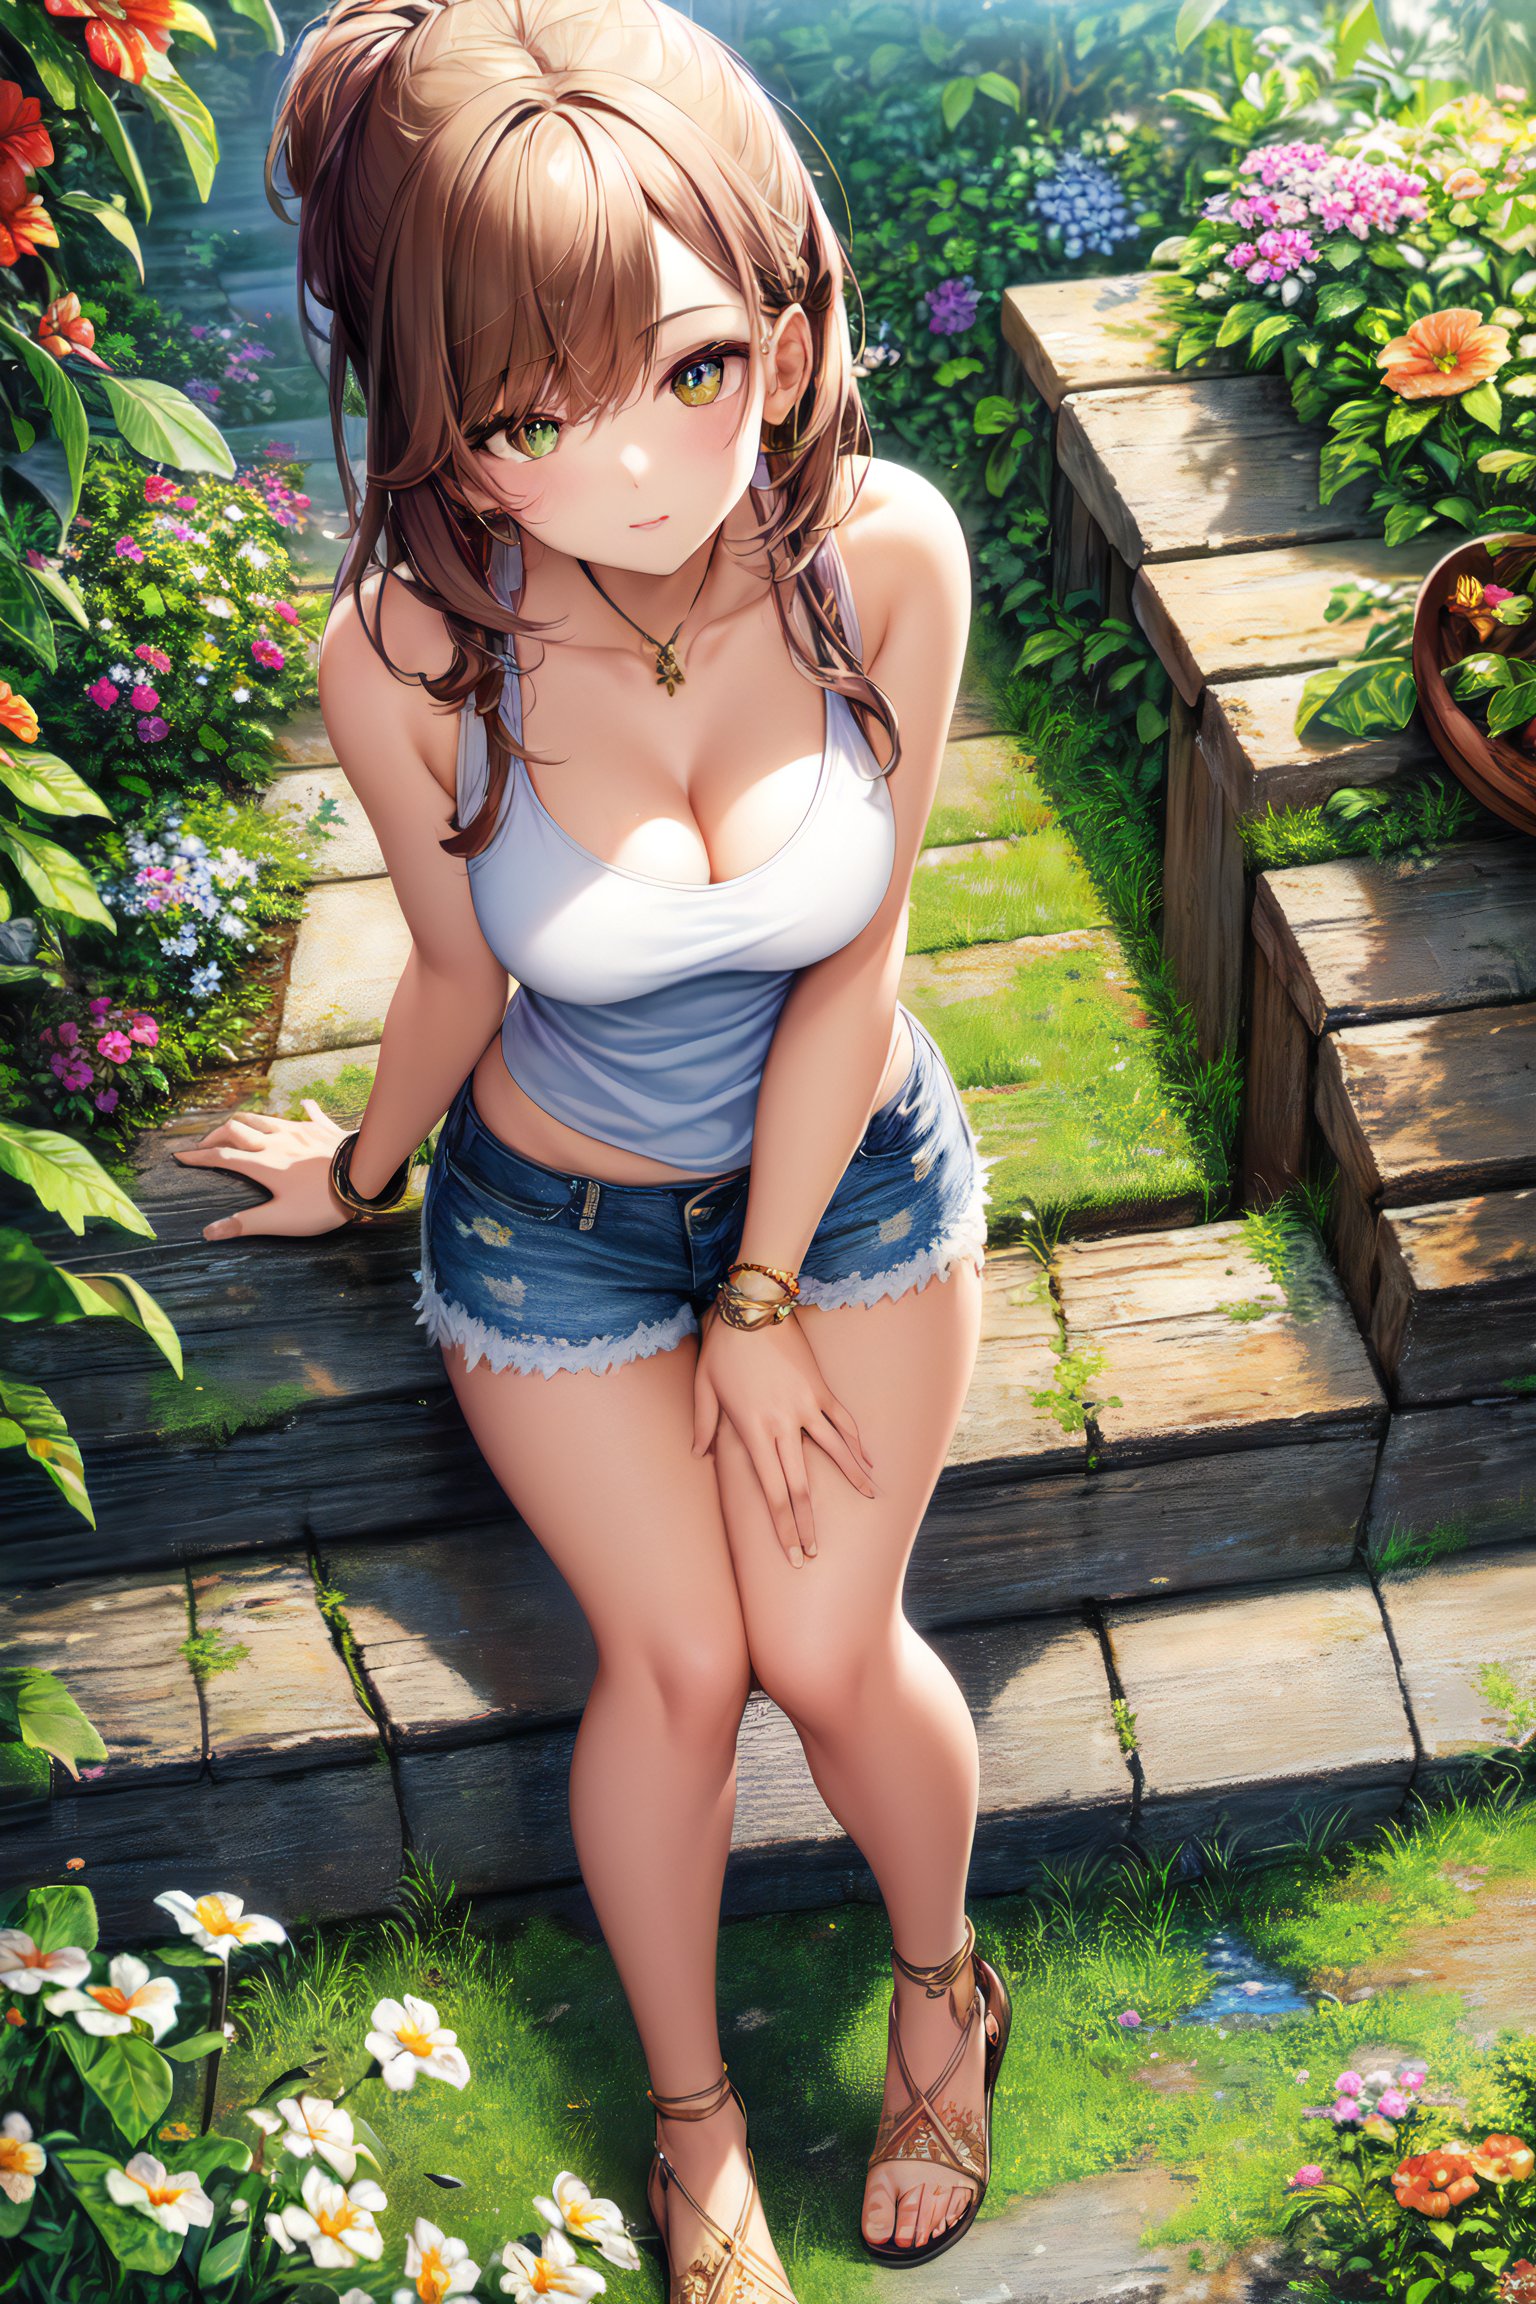 Women Brunette Digital Art Anime Girls Plants Flowers Garden Tank Top Jean Shorts Shorts Short Short 1536x2304